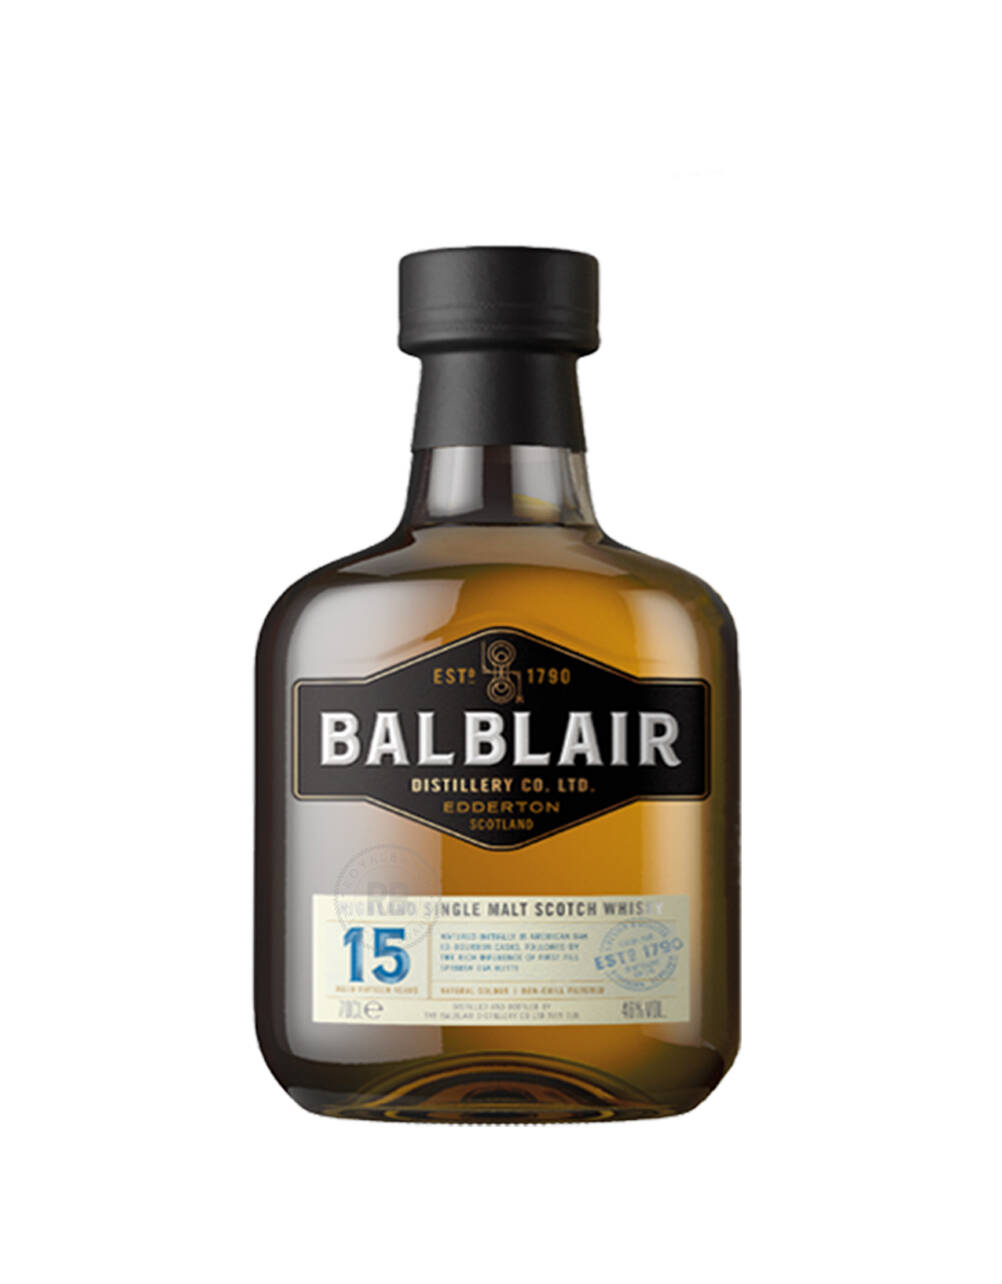 Balblair 15 Year Old Single Malt Scotch Whisky